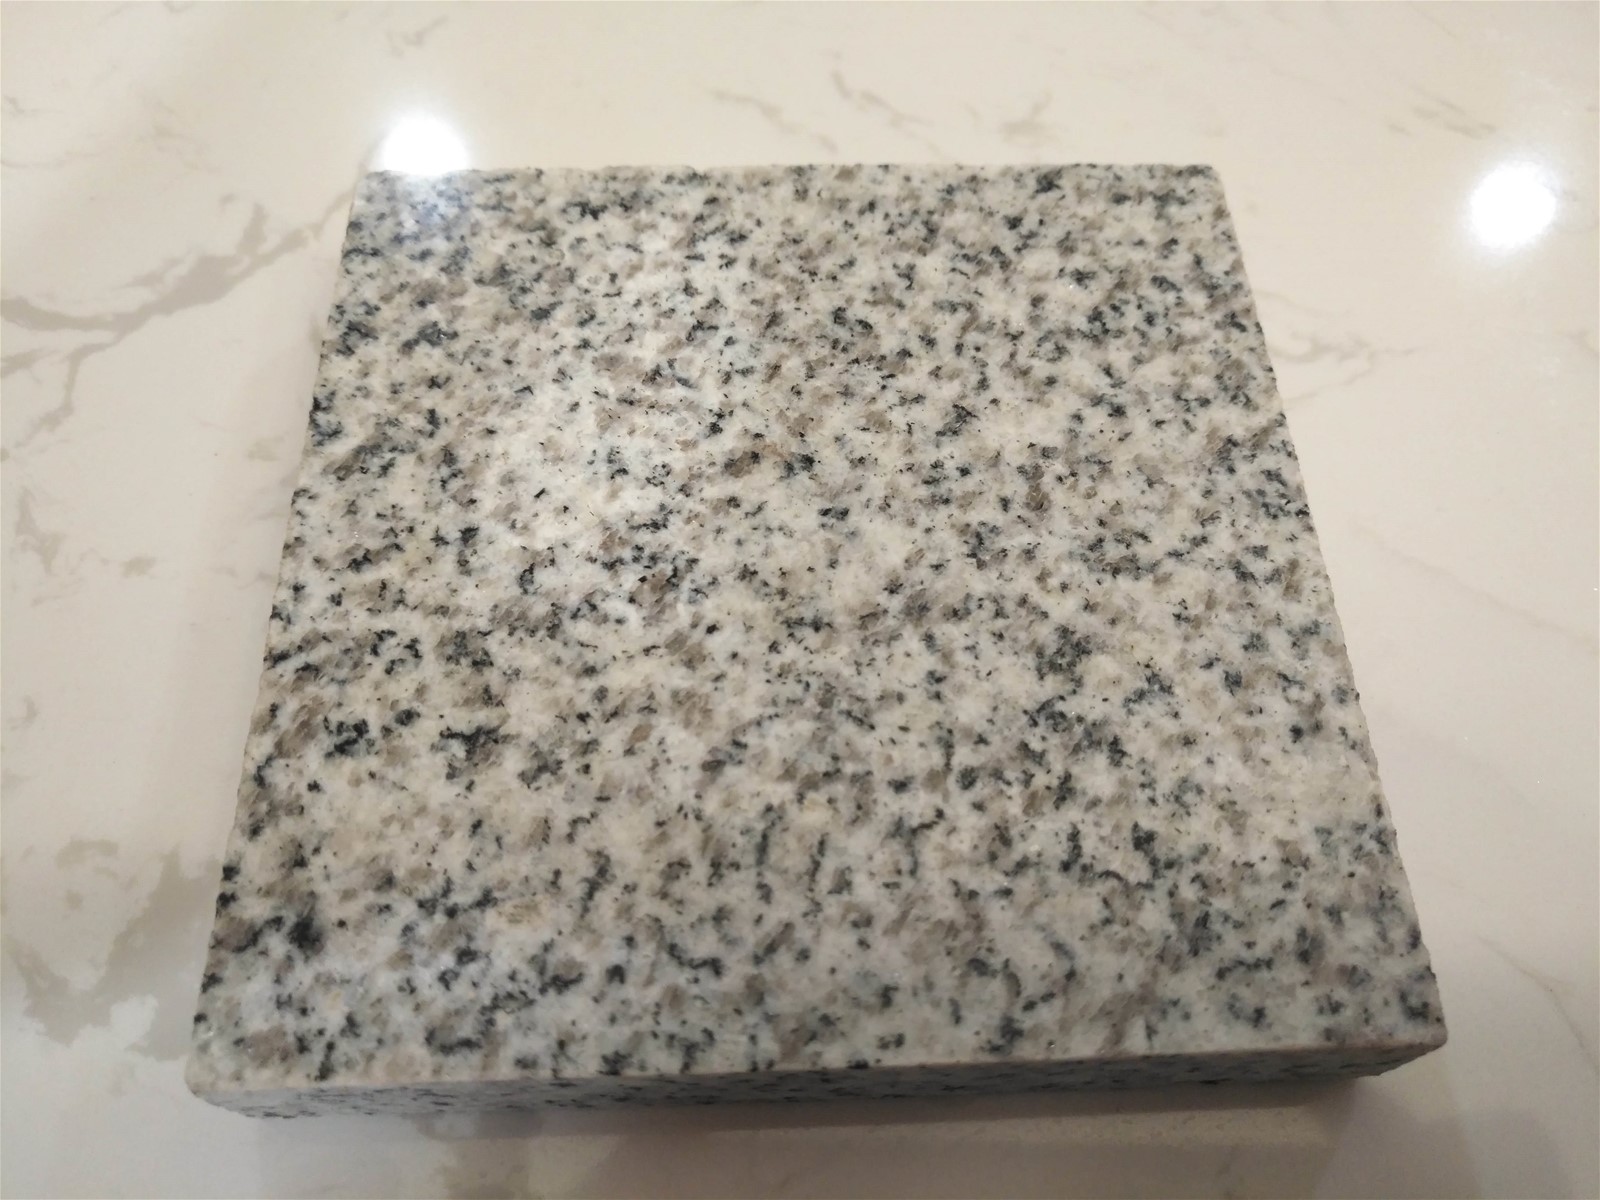 Polished G603 granite